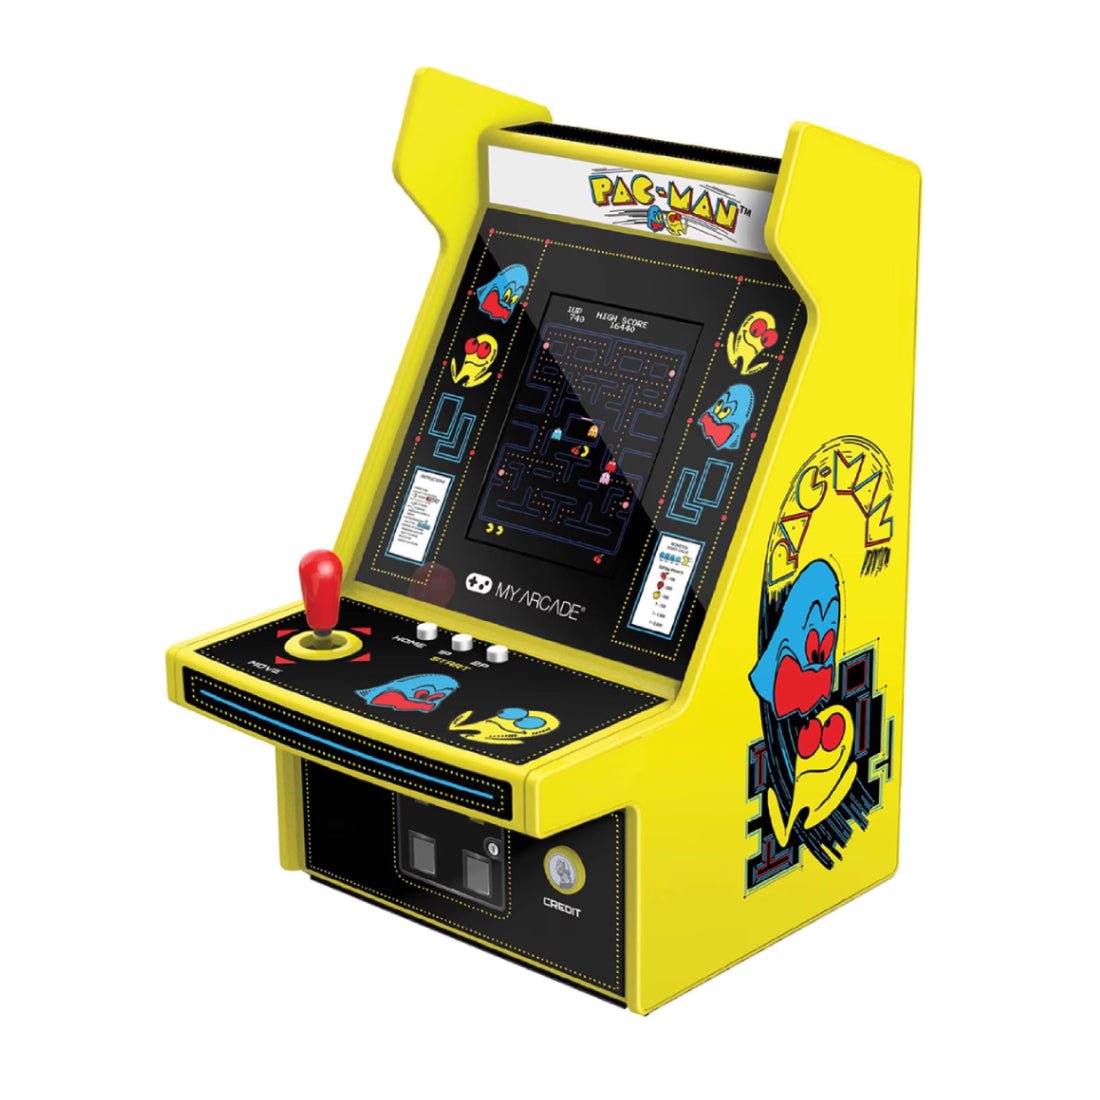 My Arcade Pac-man Micro Player Pro Game Arcade - جهاز ألعاب - Store 974 | ستور ٩٧٤